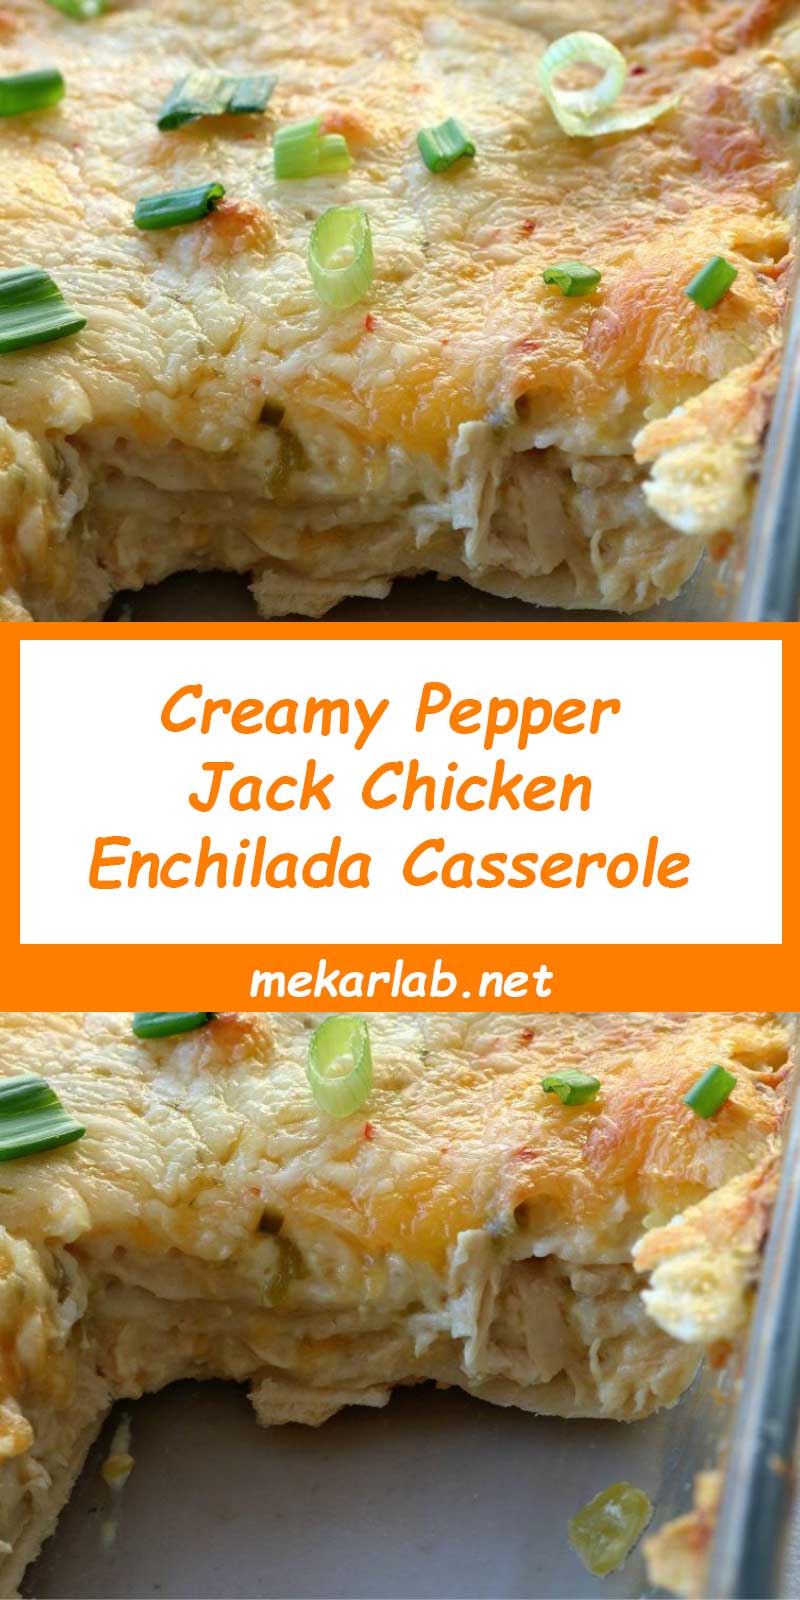 Creamy Pepper Jack Chicken Enchilada Casserole